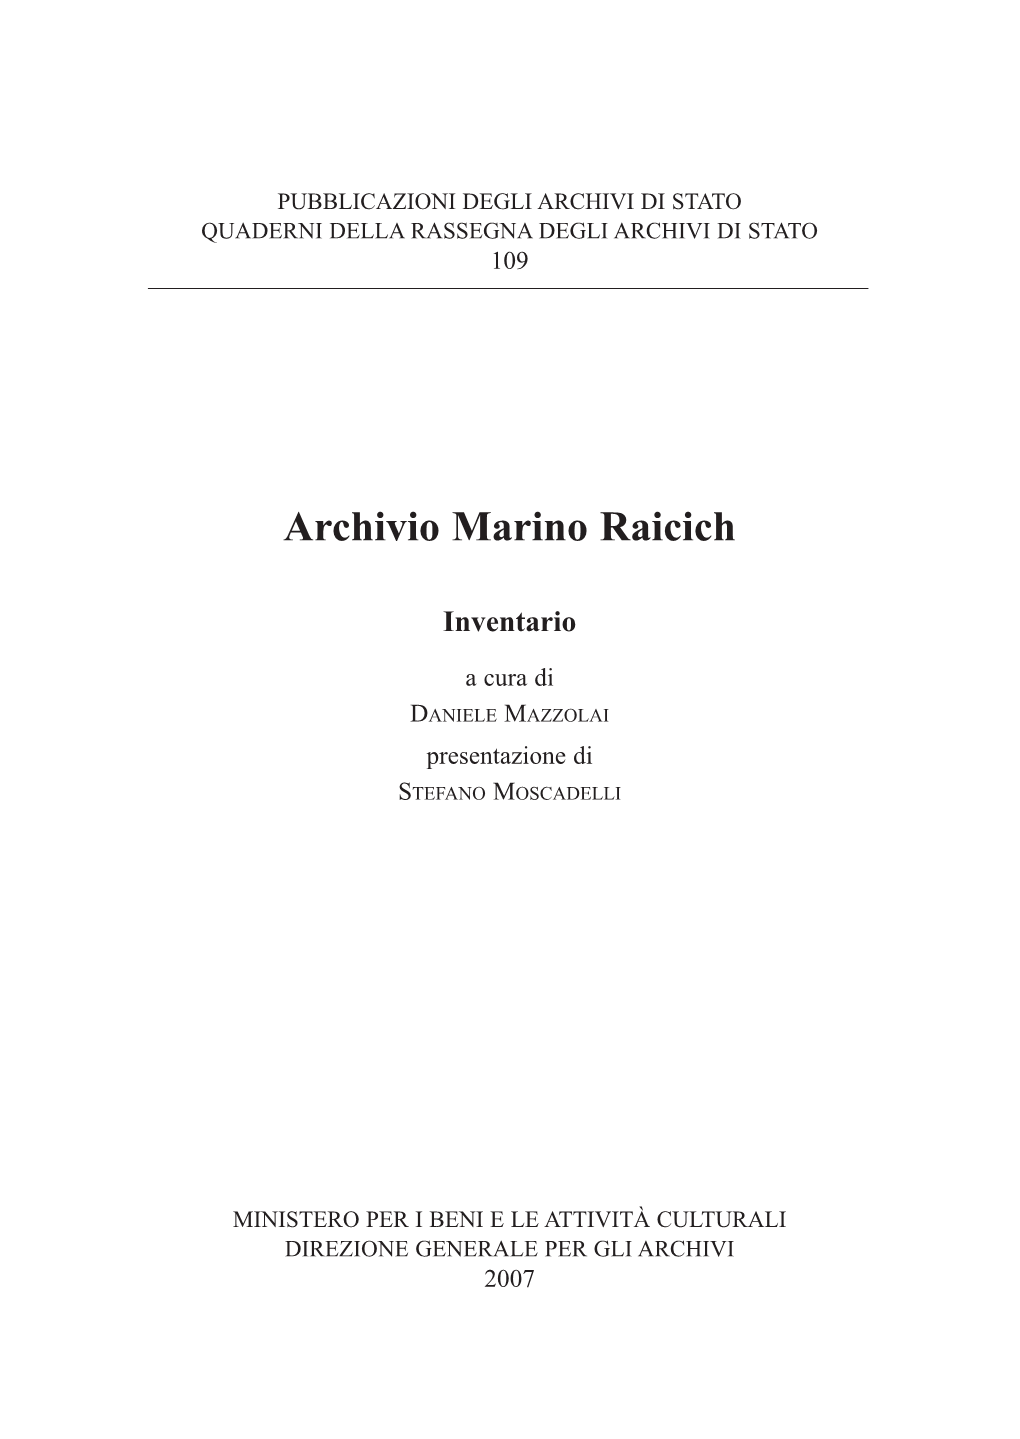 Archivio Raich 001 346